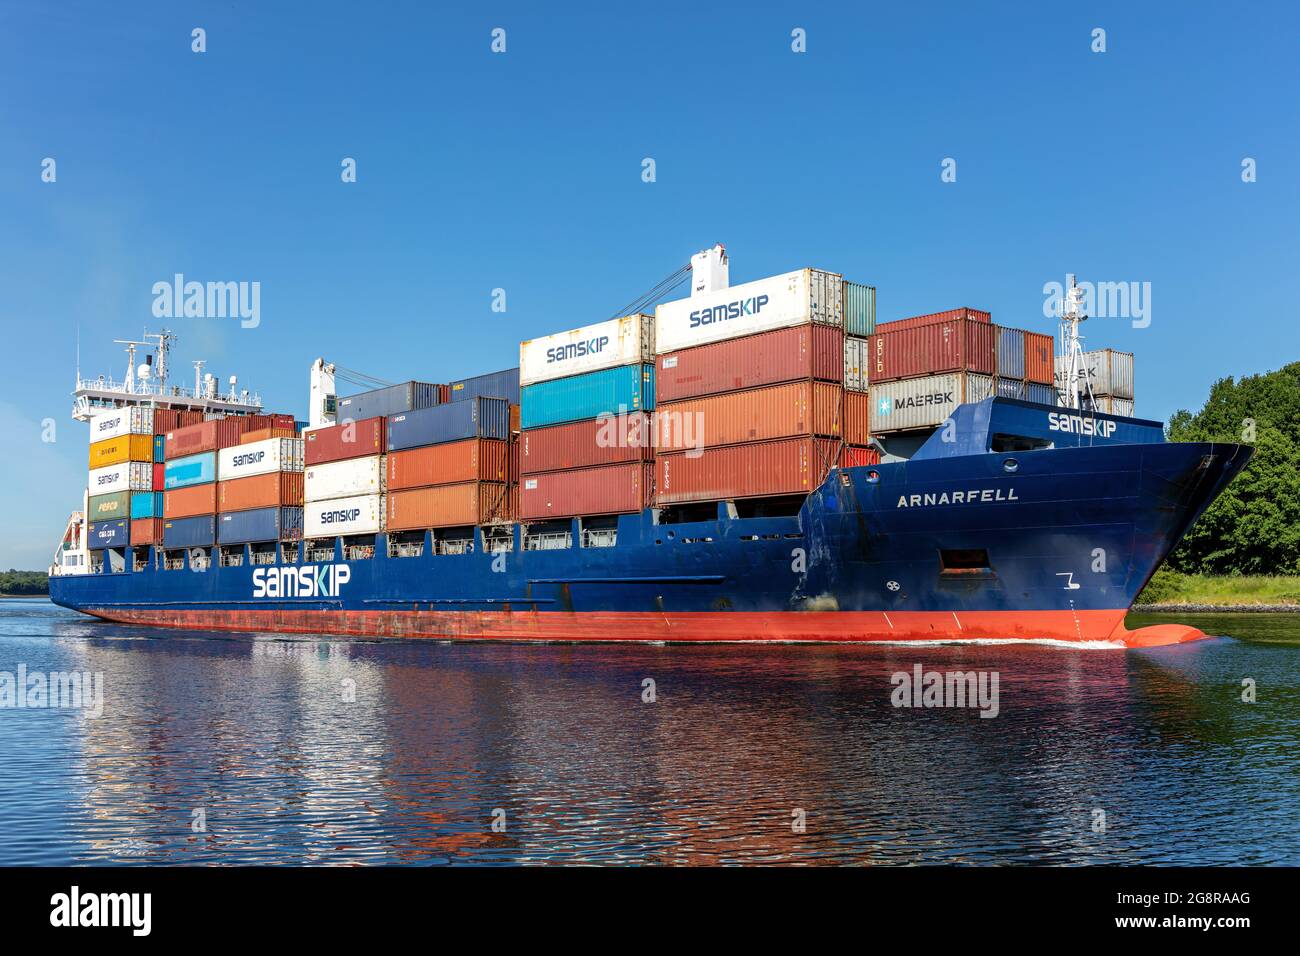 Samskip container ship ARNARFELL in the Kiel Canal Stock Photo